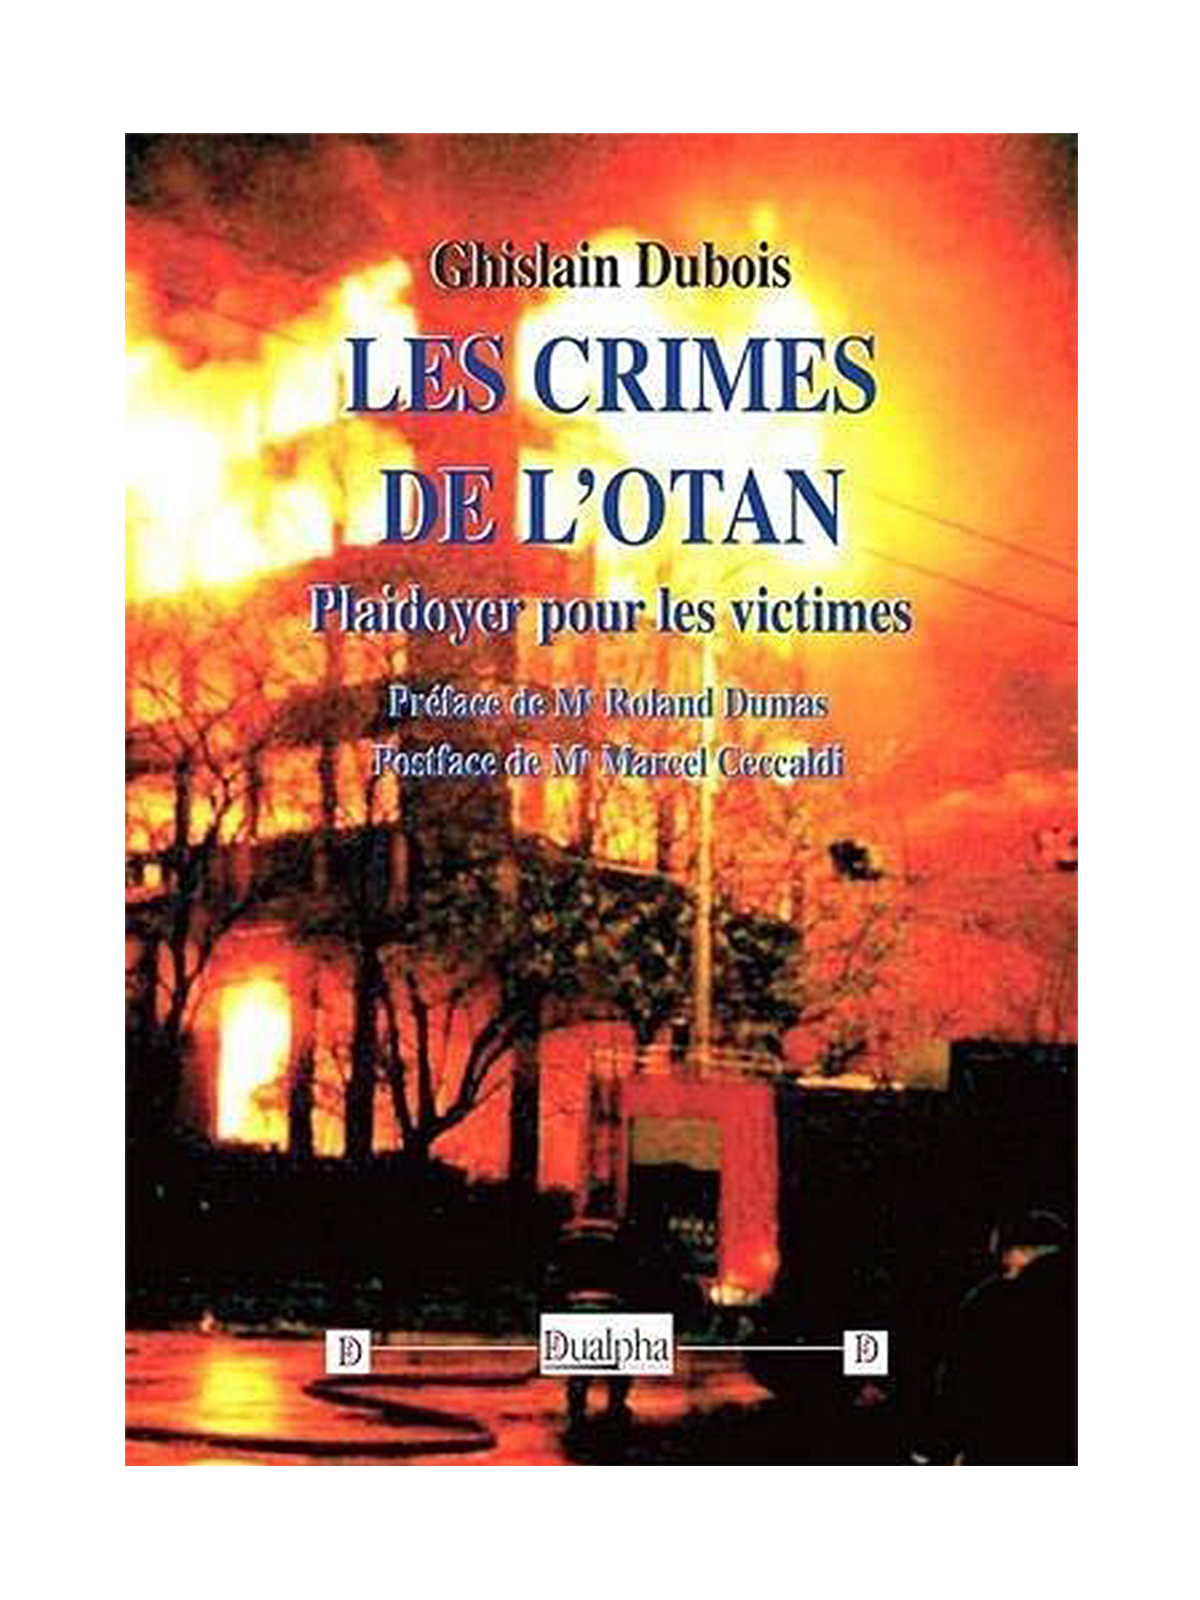 Ghislain Dubois : Les crimes de L’OTAN